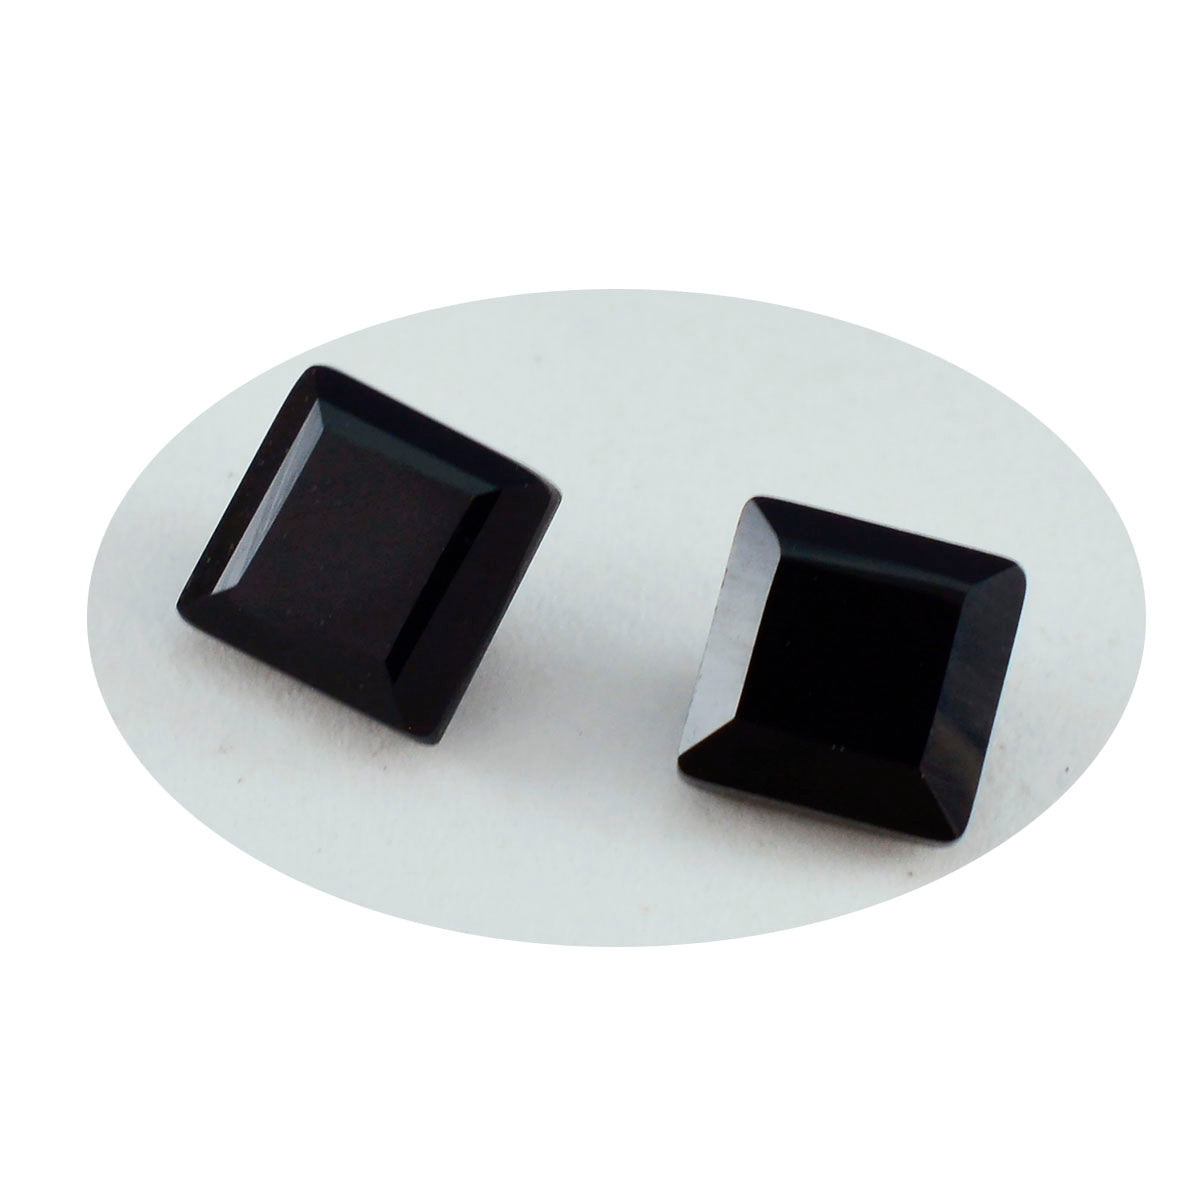 Riyogems 1PC Natural Black Onyx Faceted 10x10 mm Square Shape beauty Quality Gems